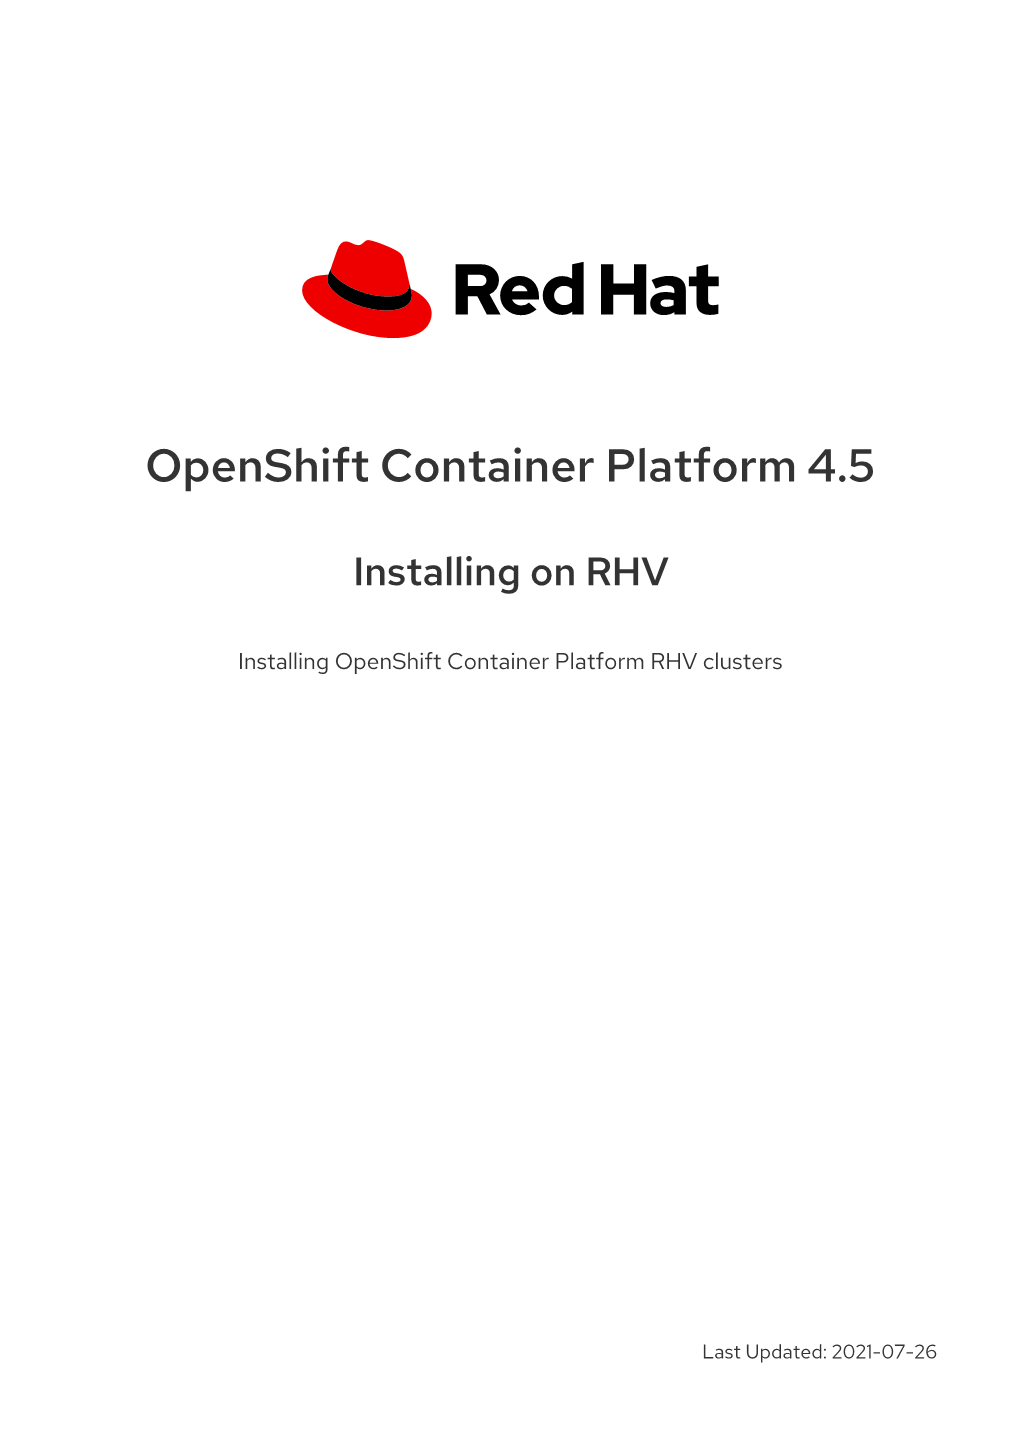 Openshift Container Platform 4.5 Installing on RHV